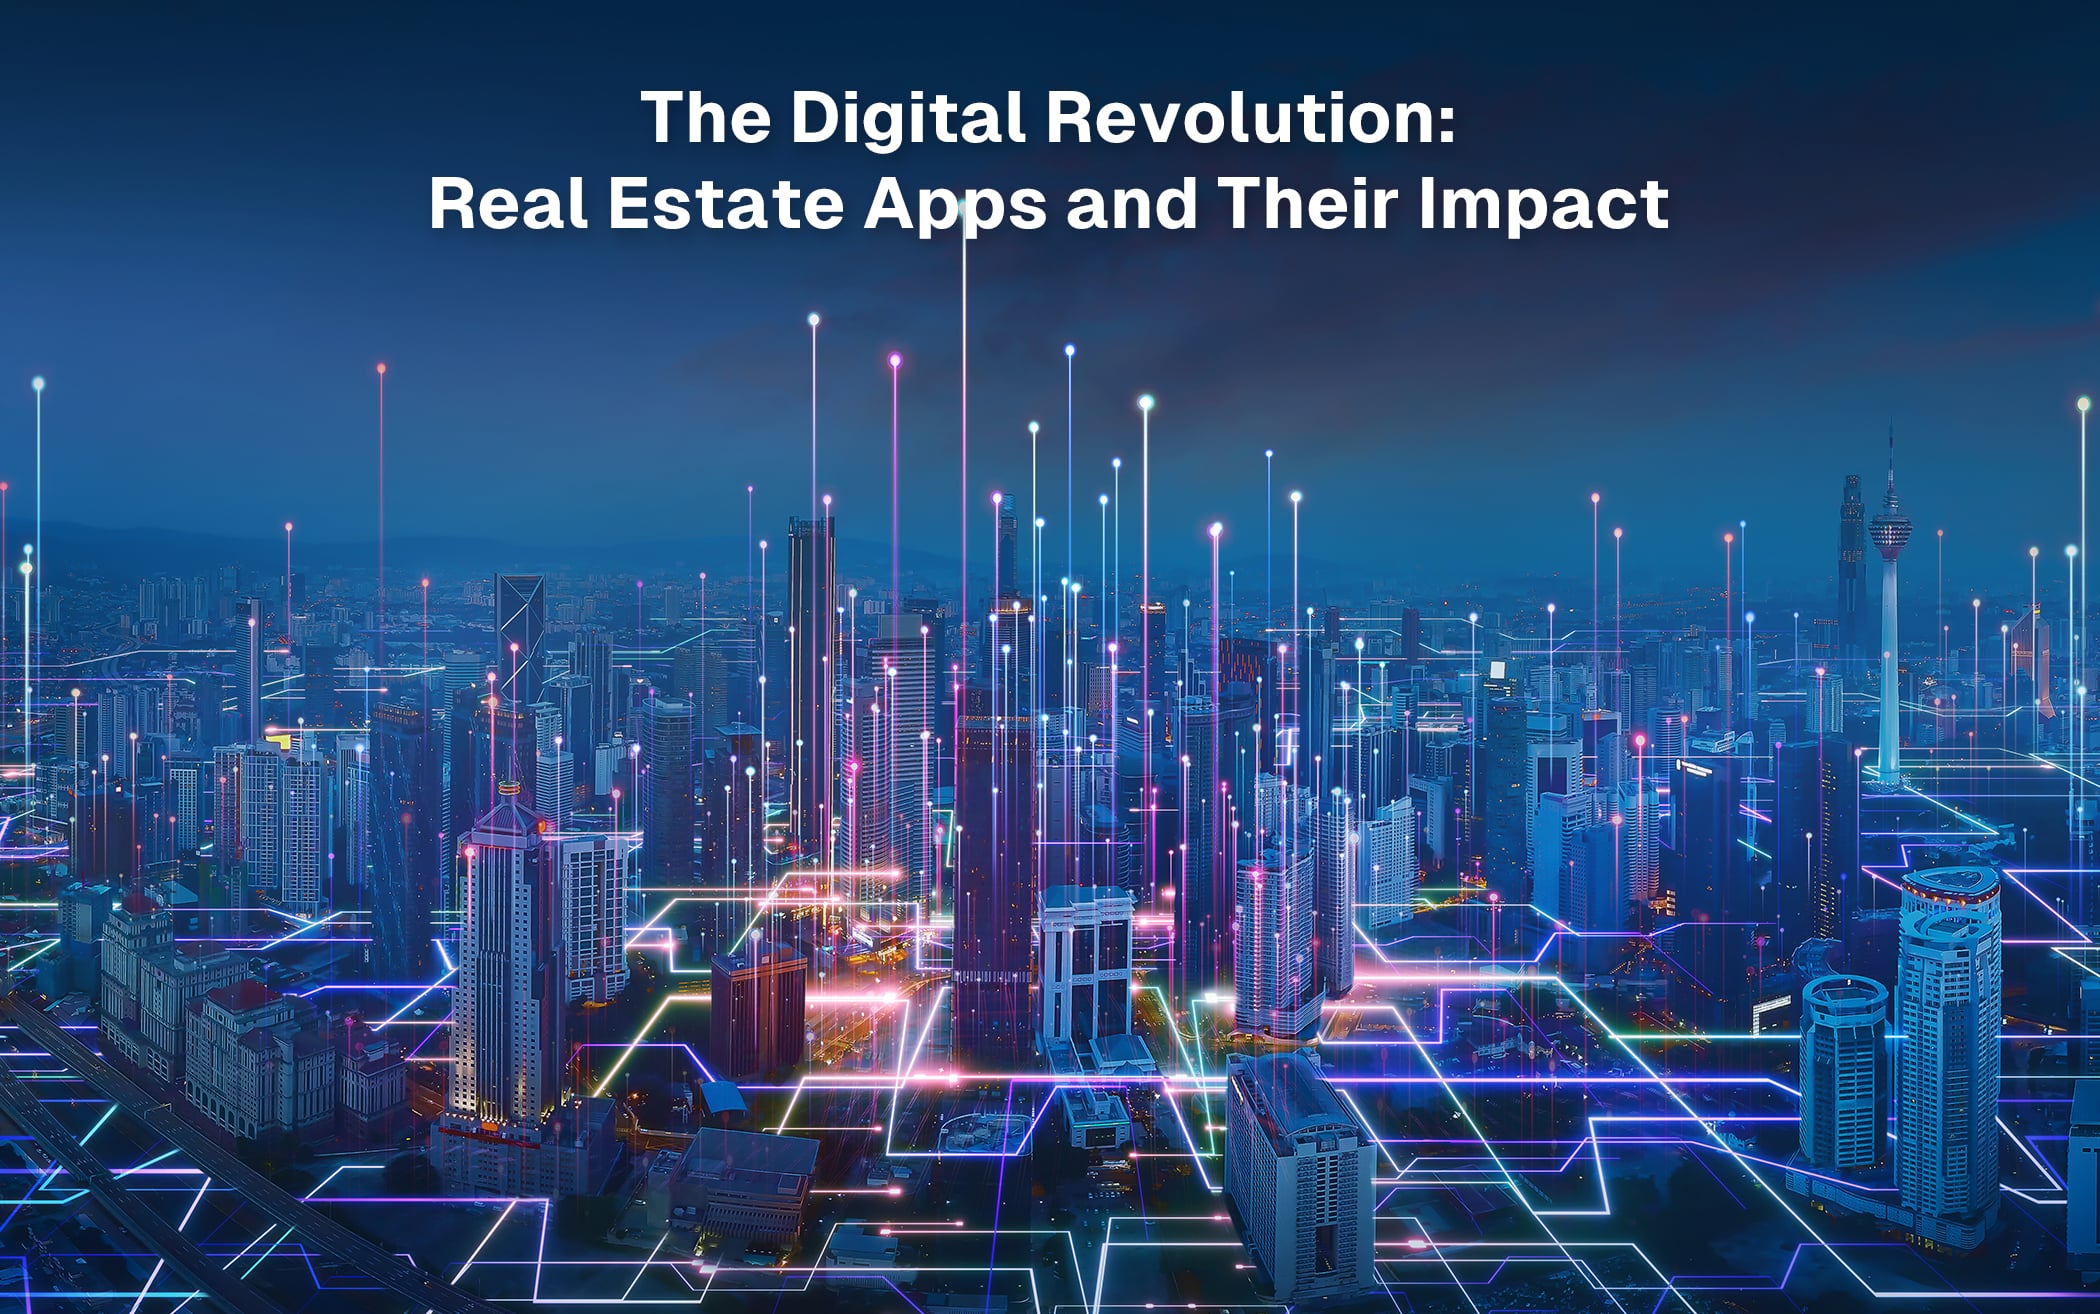 The Digital Revolution: Real Estate Apps Transforming Property Markets